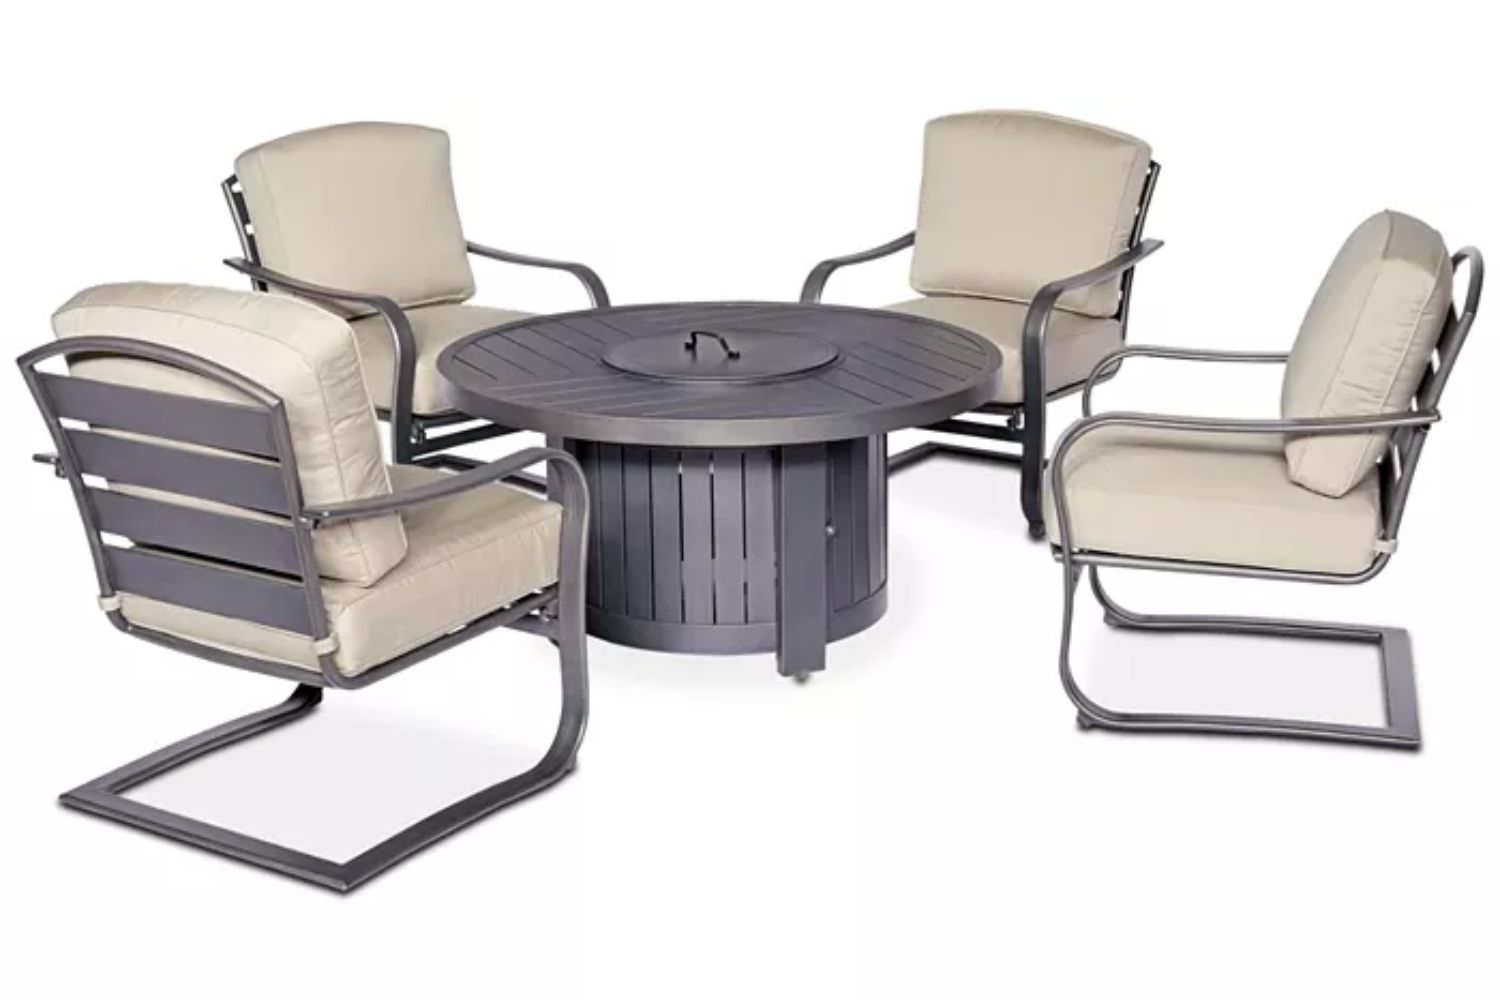 The Best Furniture Deals Option: Marlough II 5-Piece Round Fire Pit Chat Set